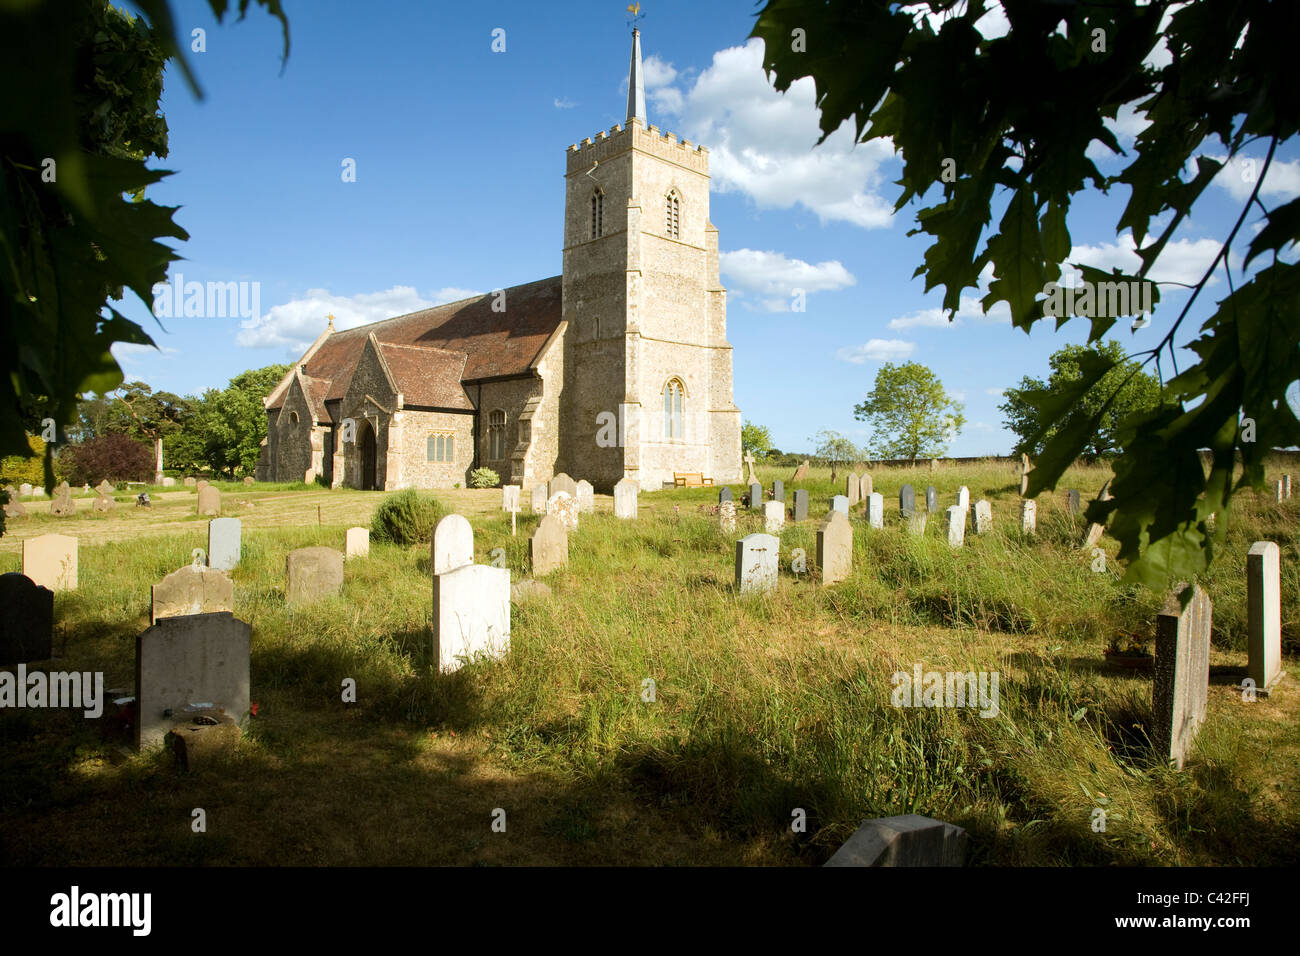 All Saints church and graveyard, Sudbourne, Suffolk, England Stock Photo